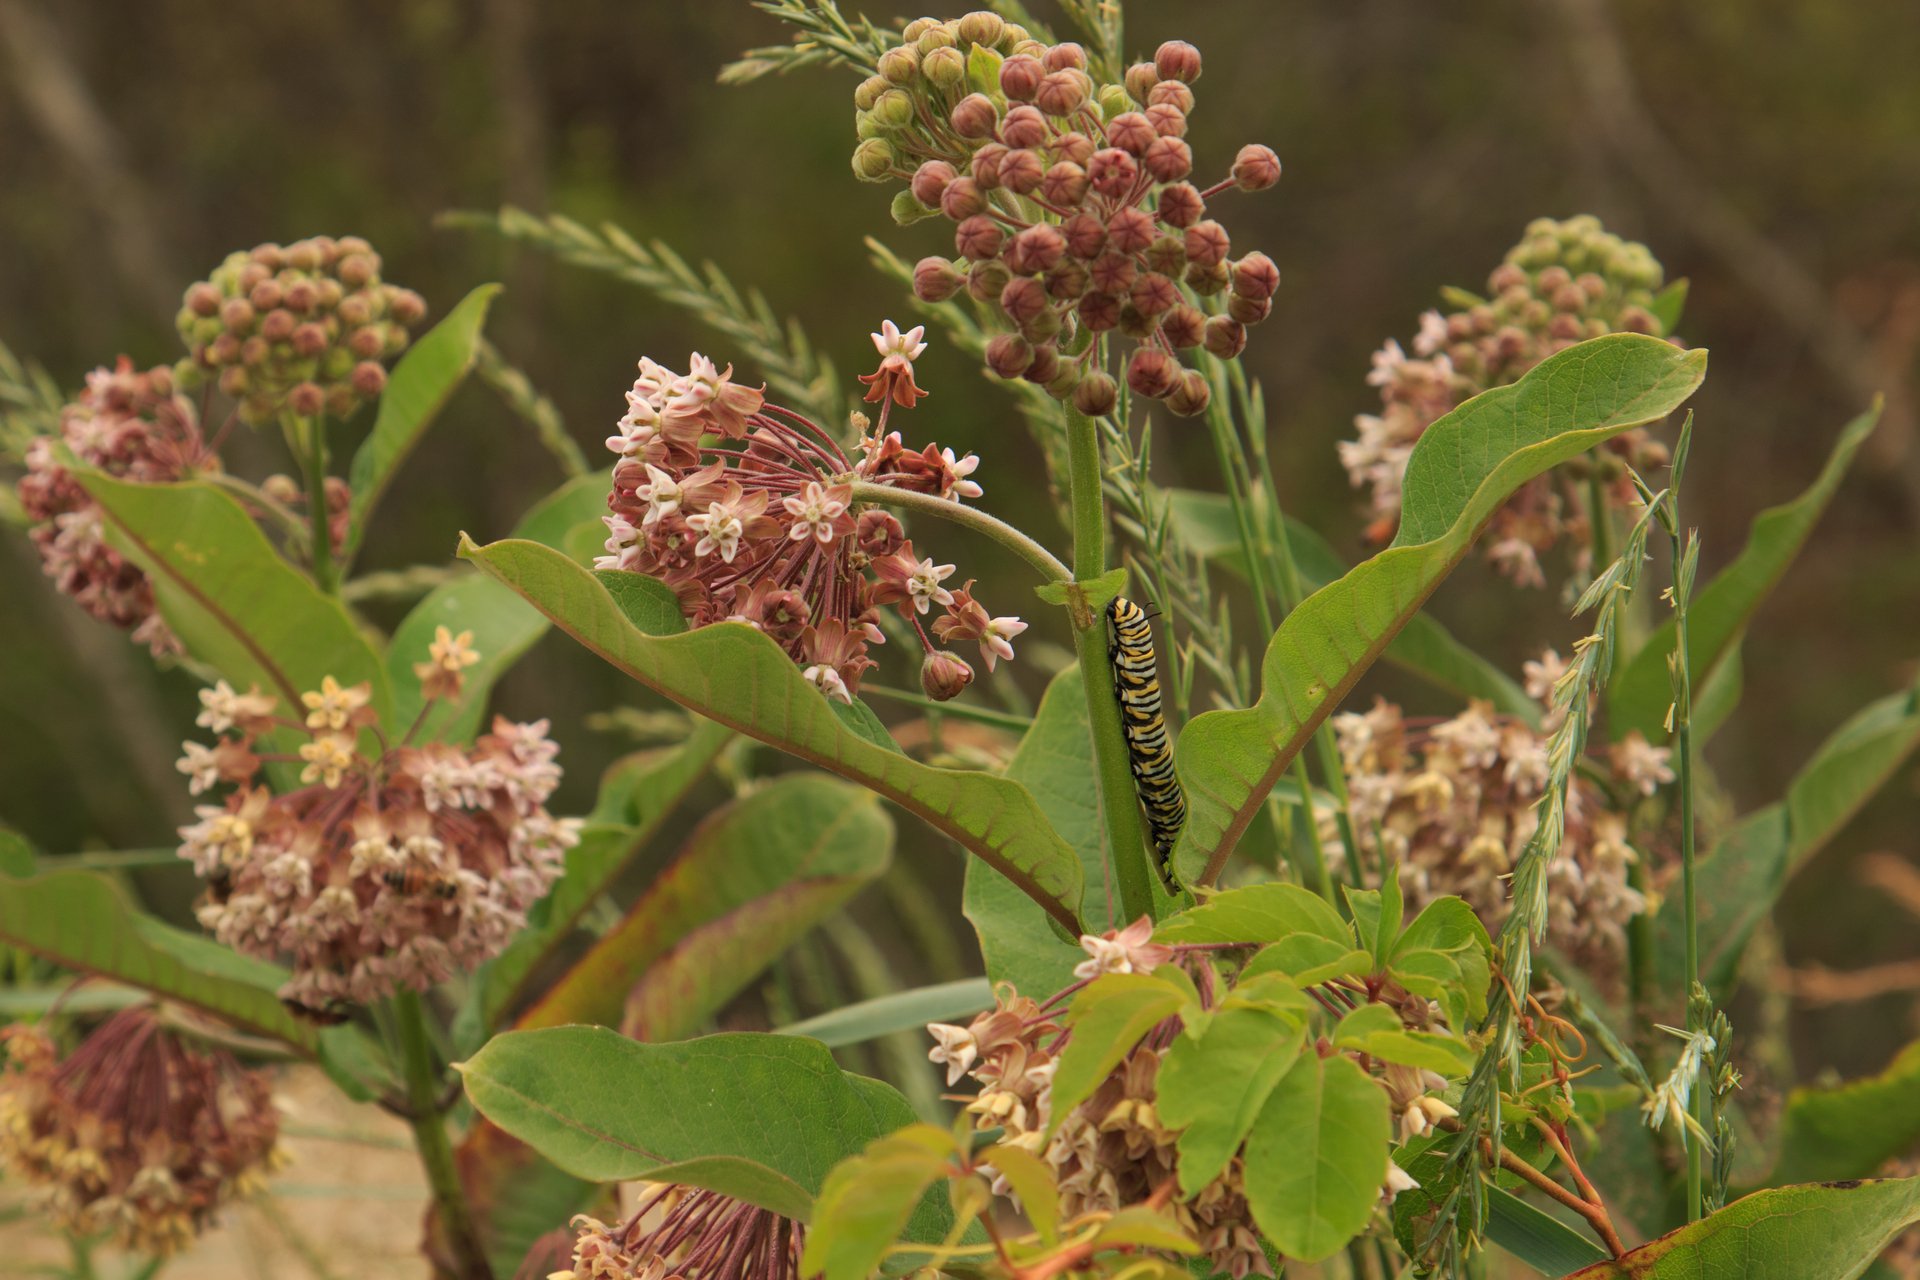 Caterpillar crawling on milkweed plant